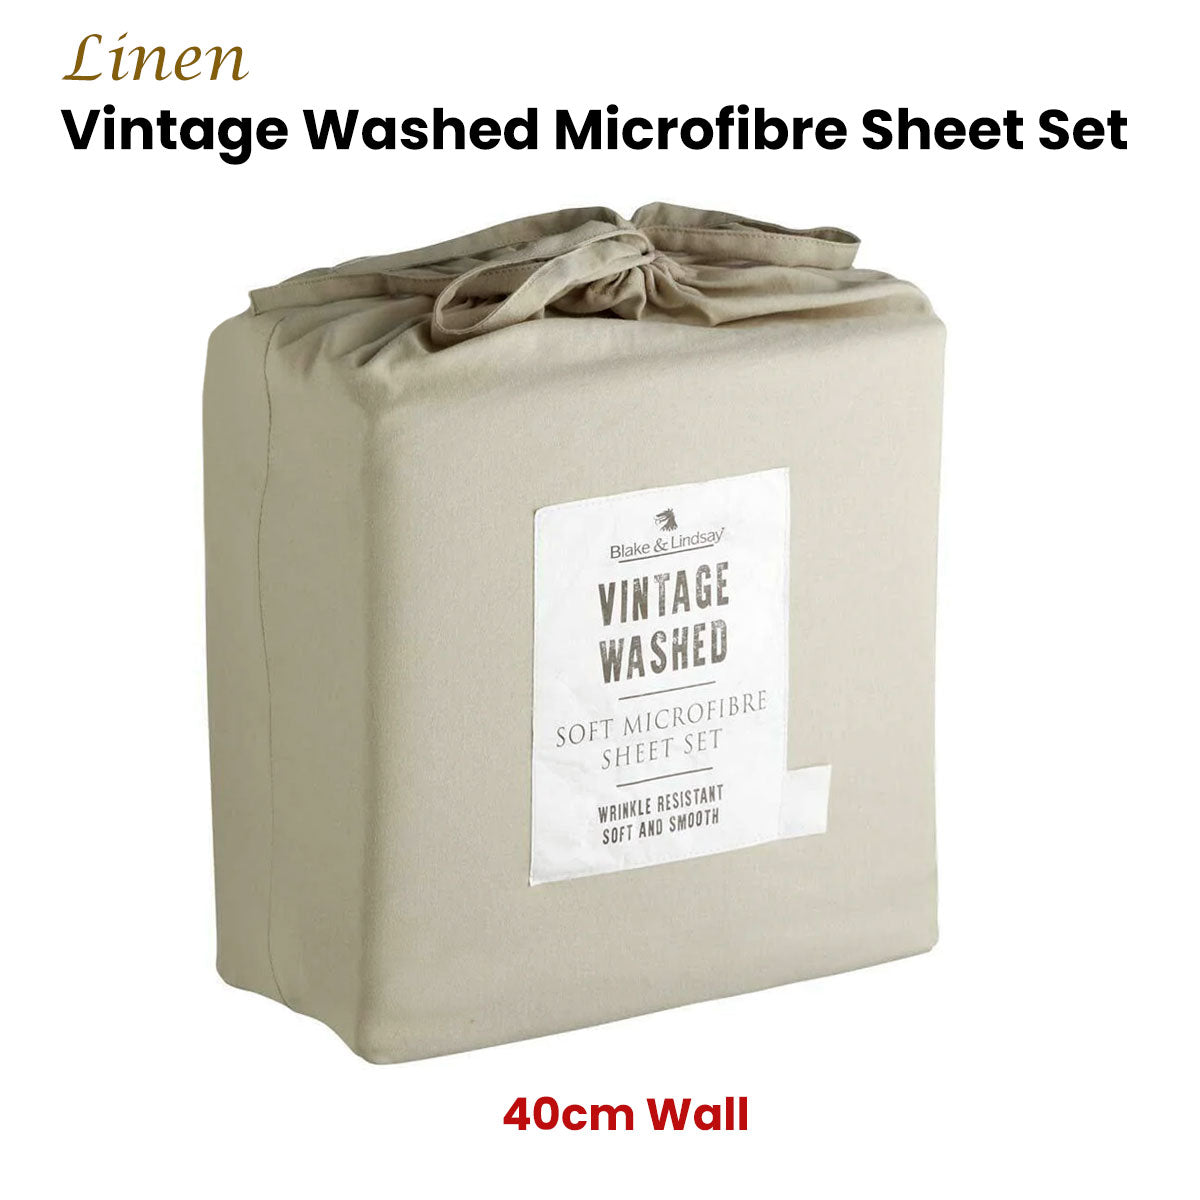 Blake & Lindsay Linen Vintage Washed Microfibre Sheet Set 40cm Wall King Single